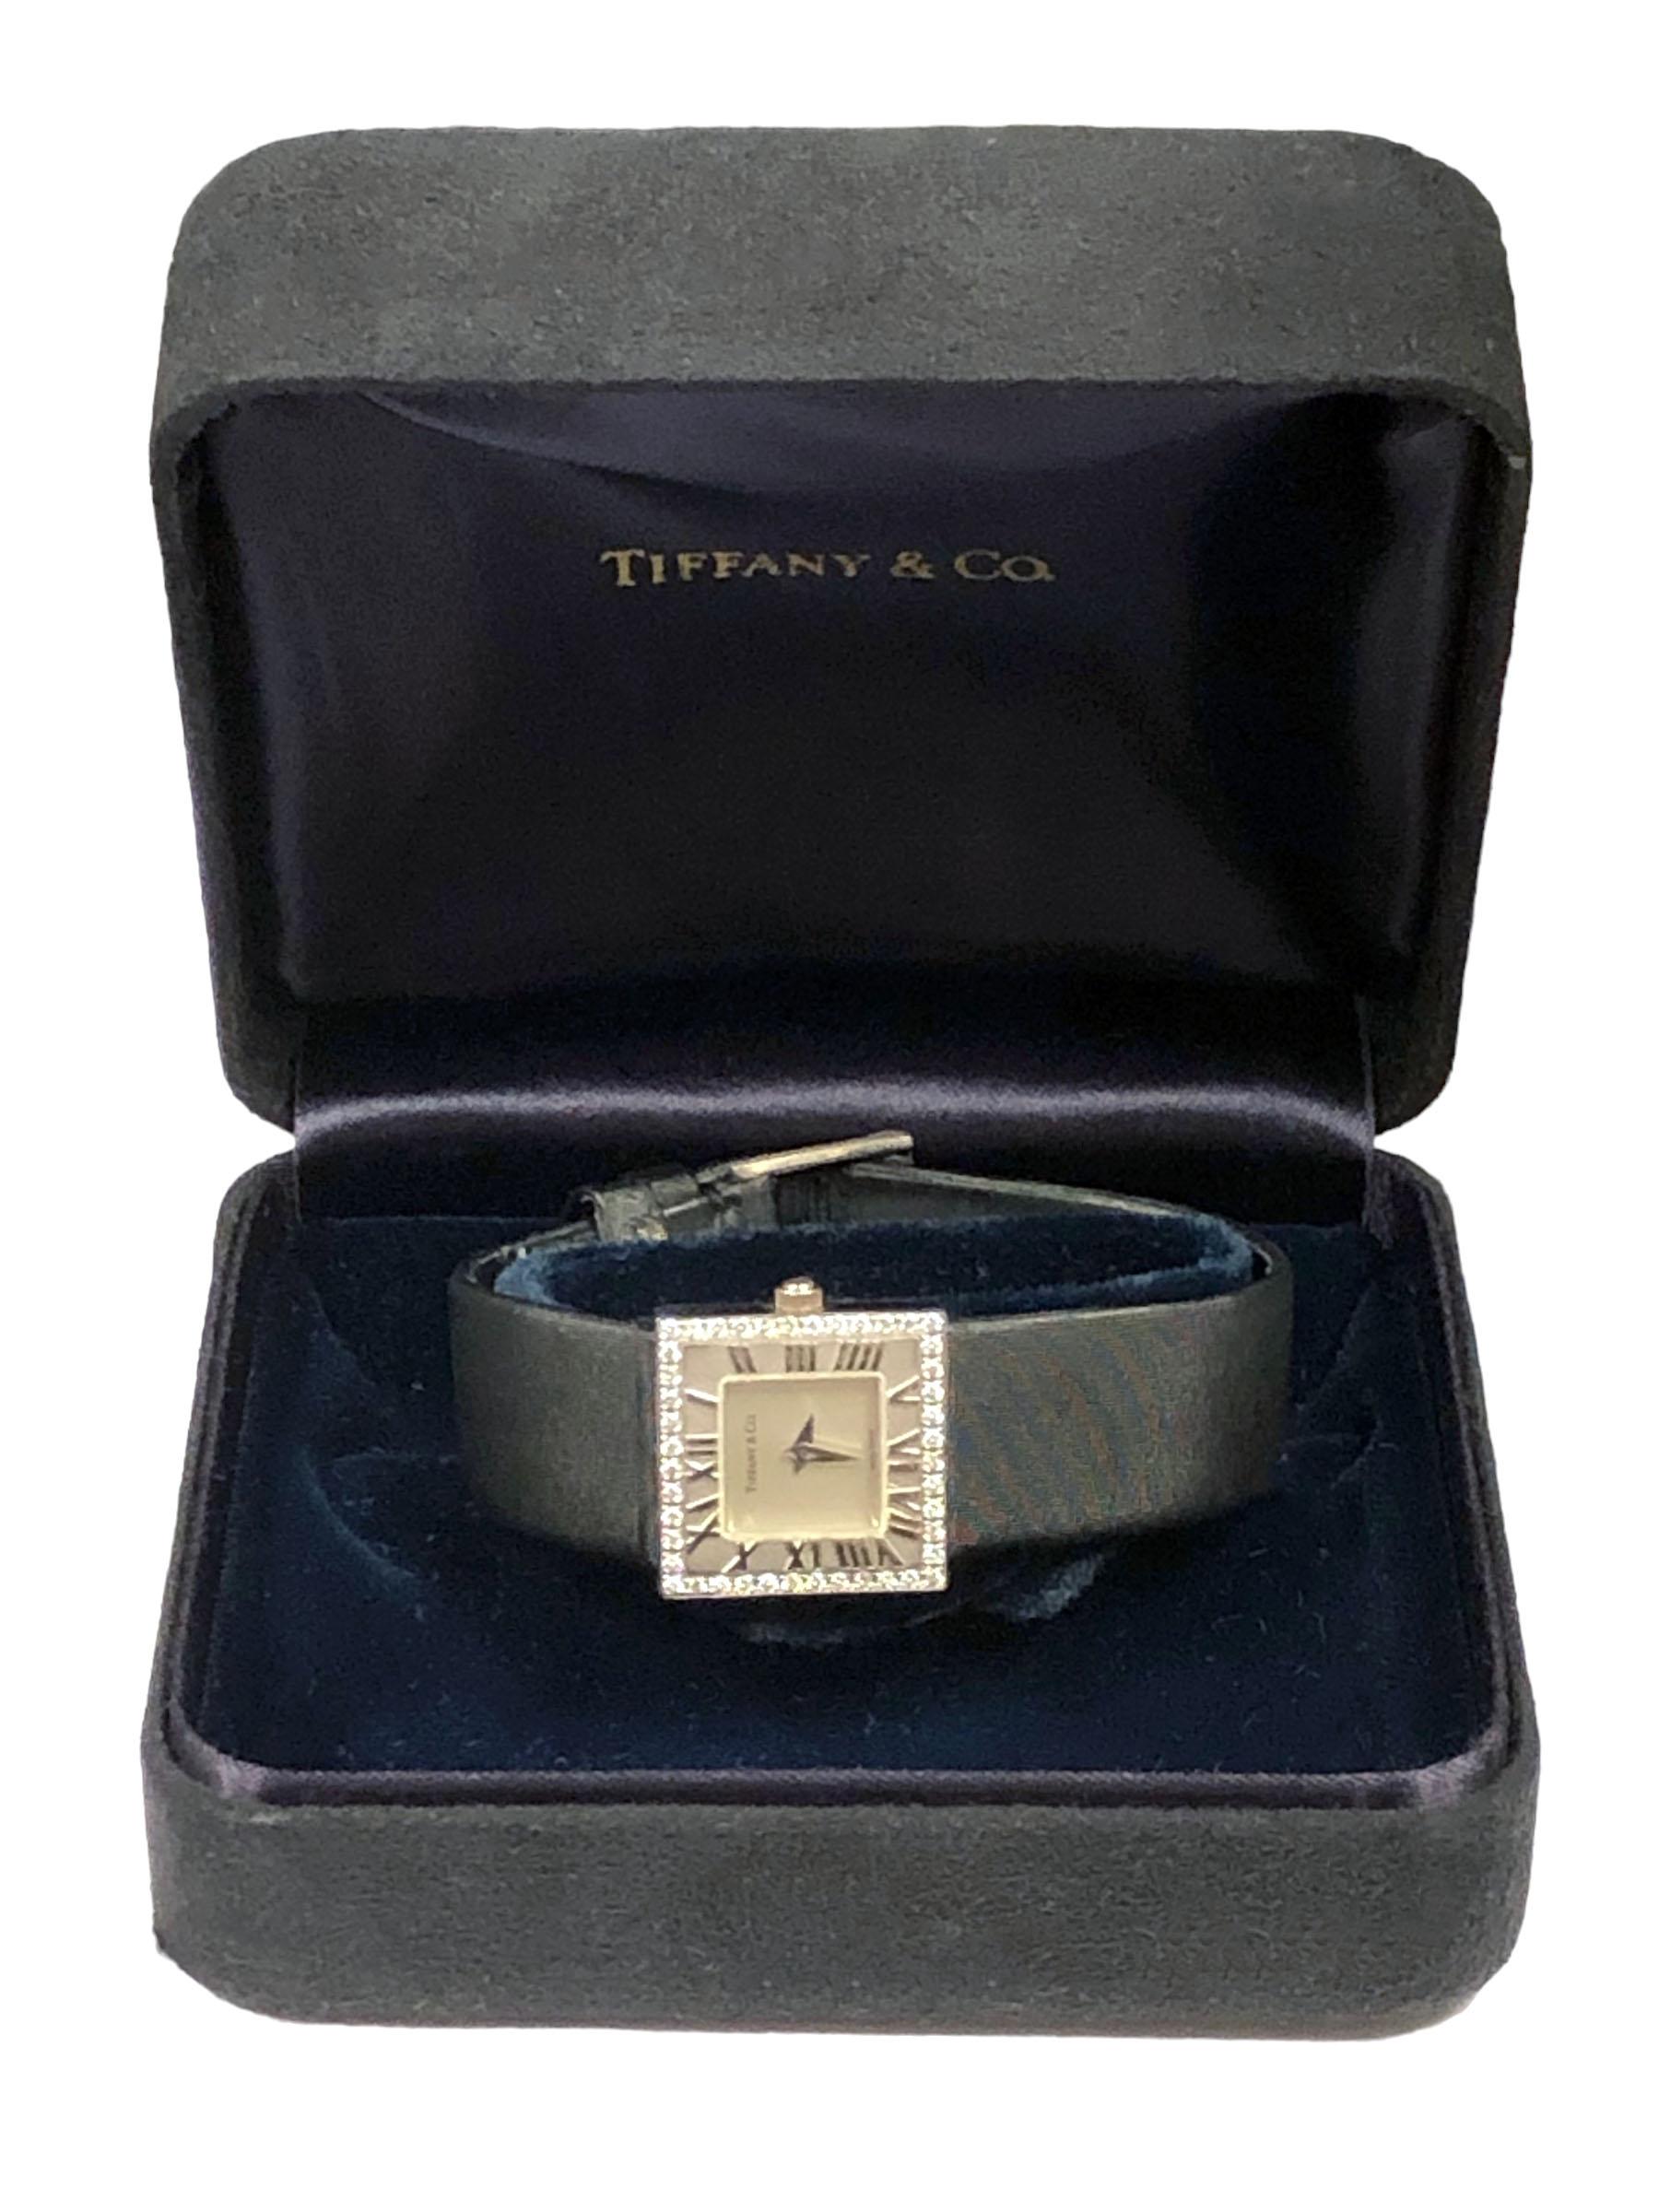 Tiffany & Company White Gold and Diamond Atlas Collection Ladies Quartz Watch 2